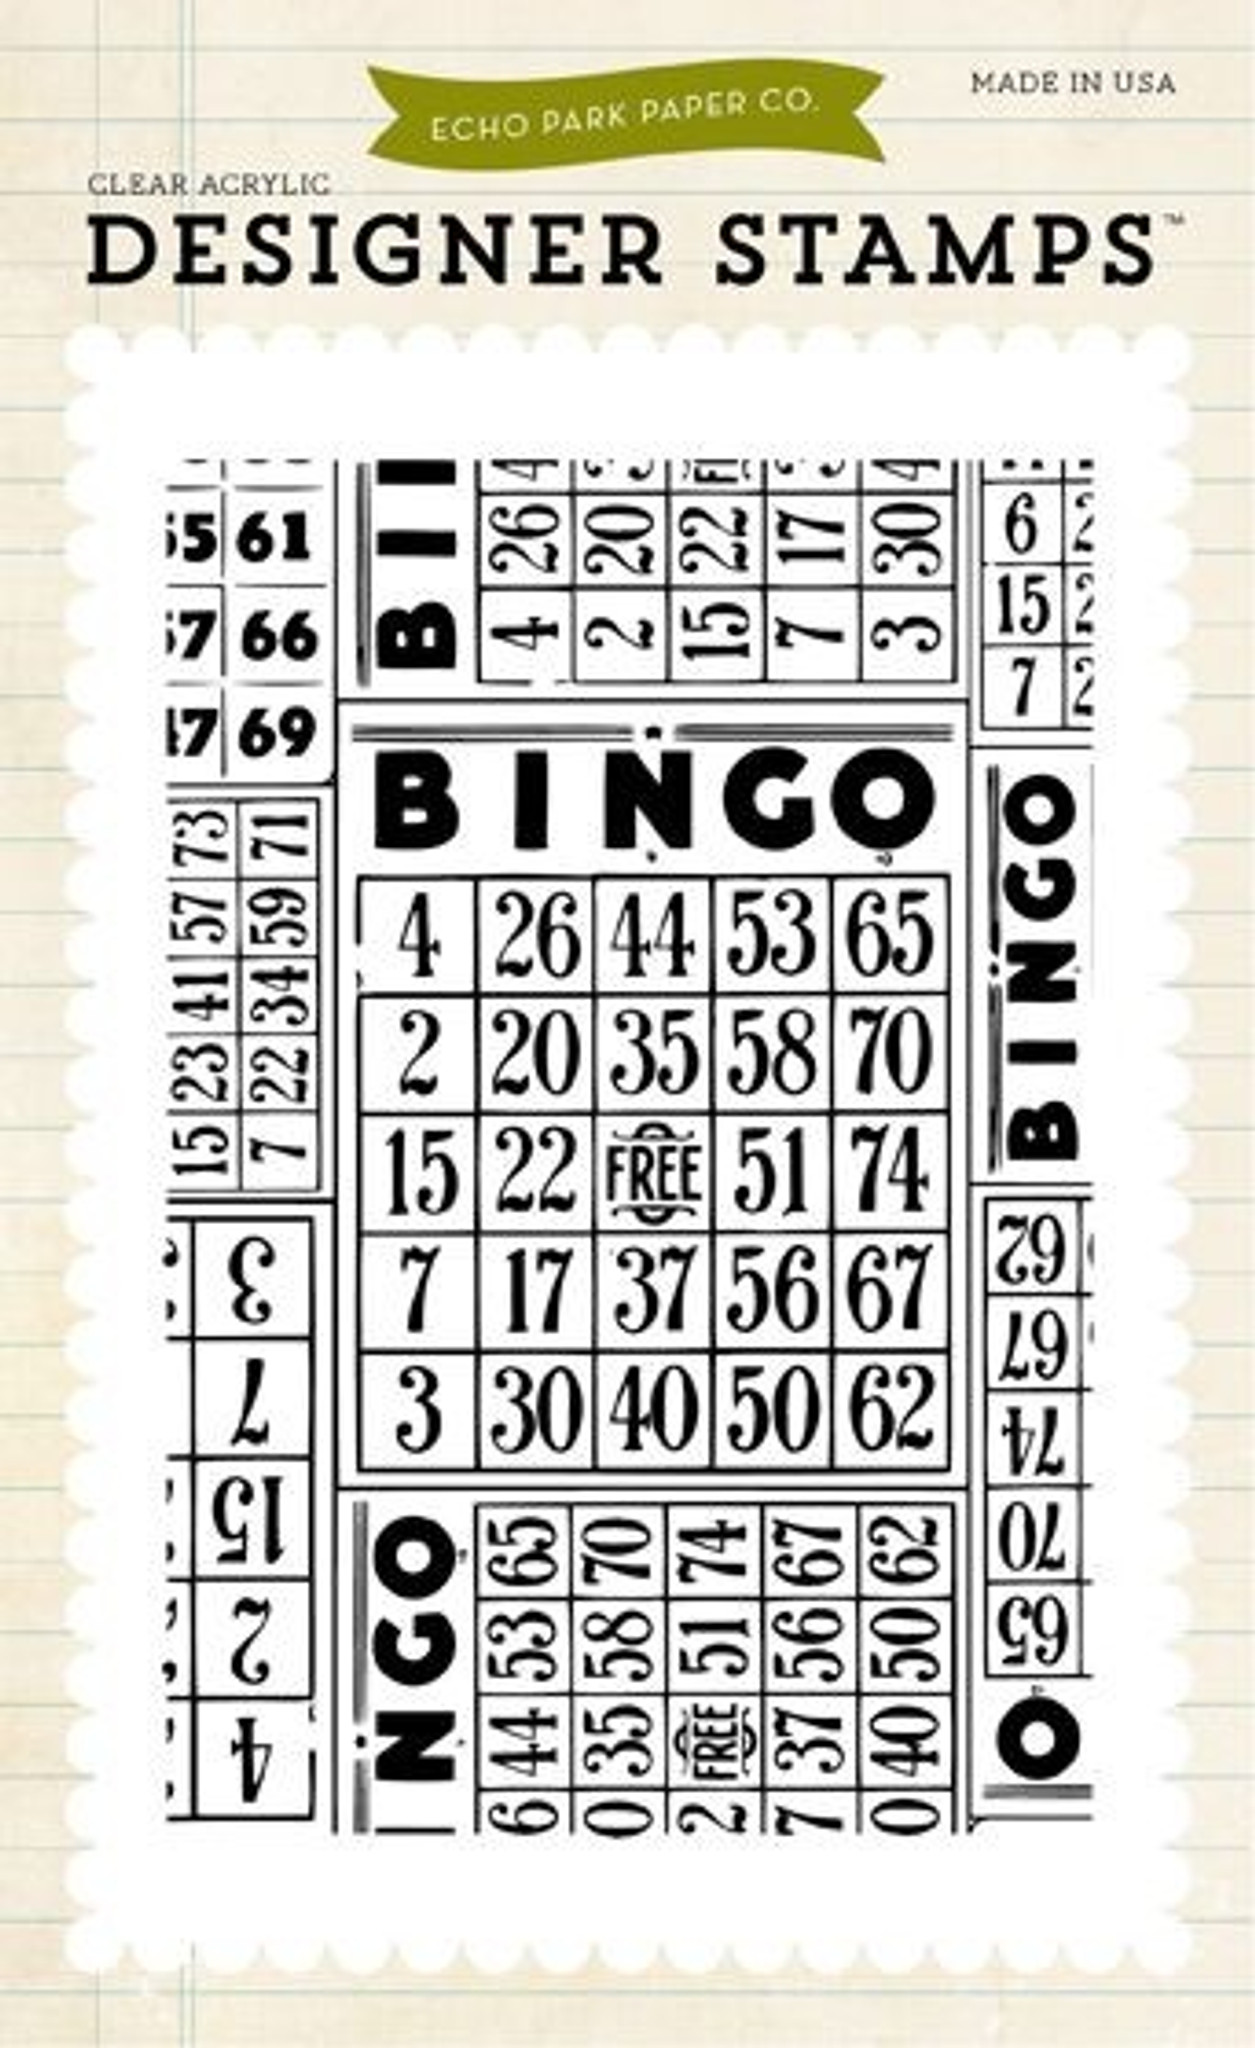 Bingo Cards 4x6 Stamp - Echo Park Paper Co.